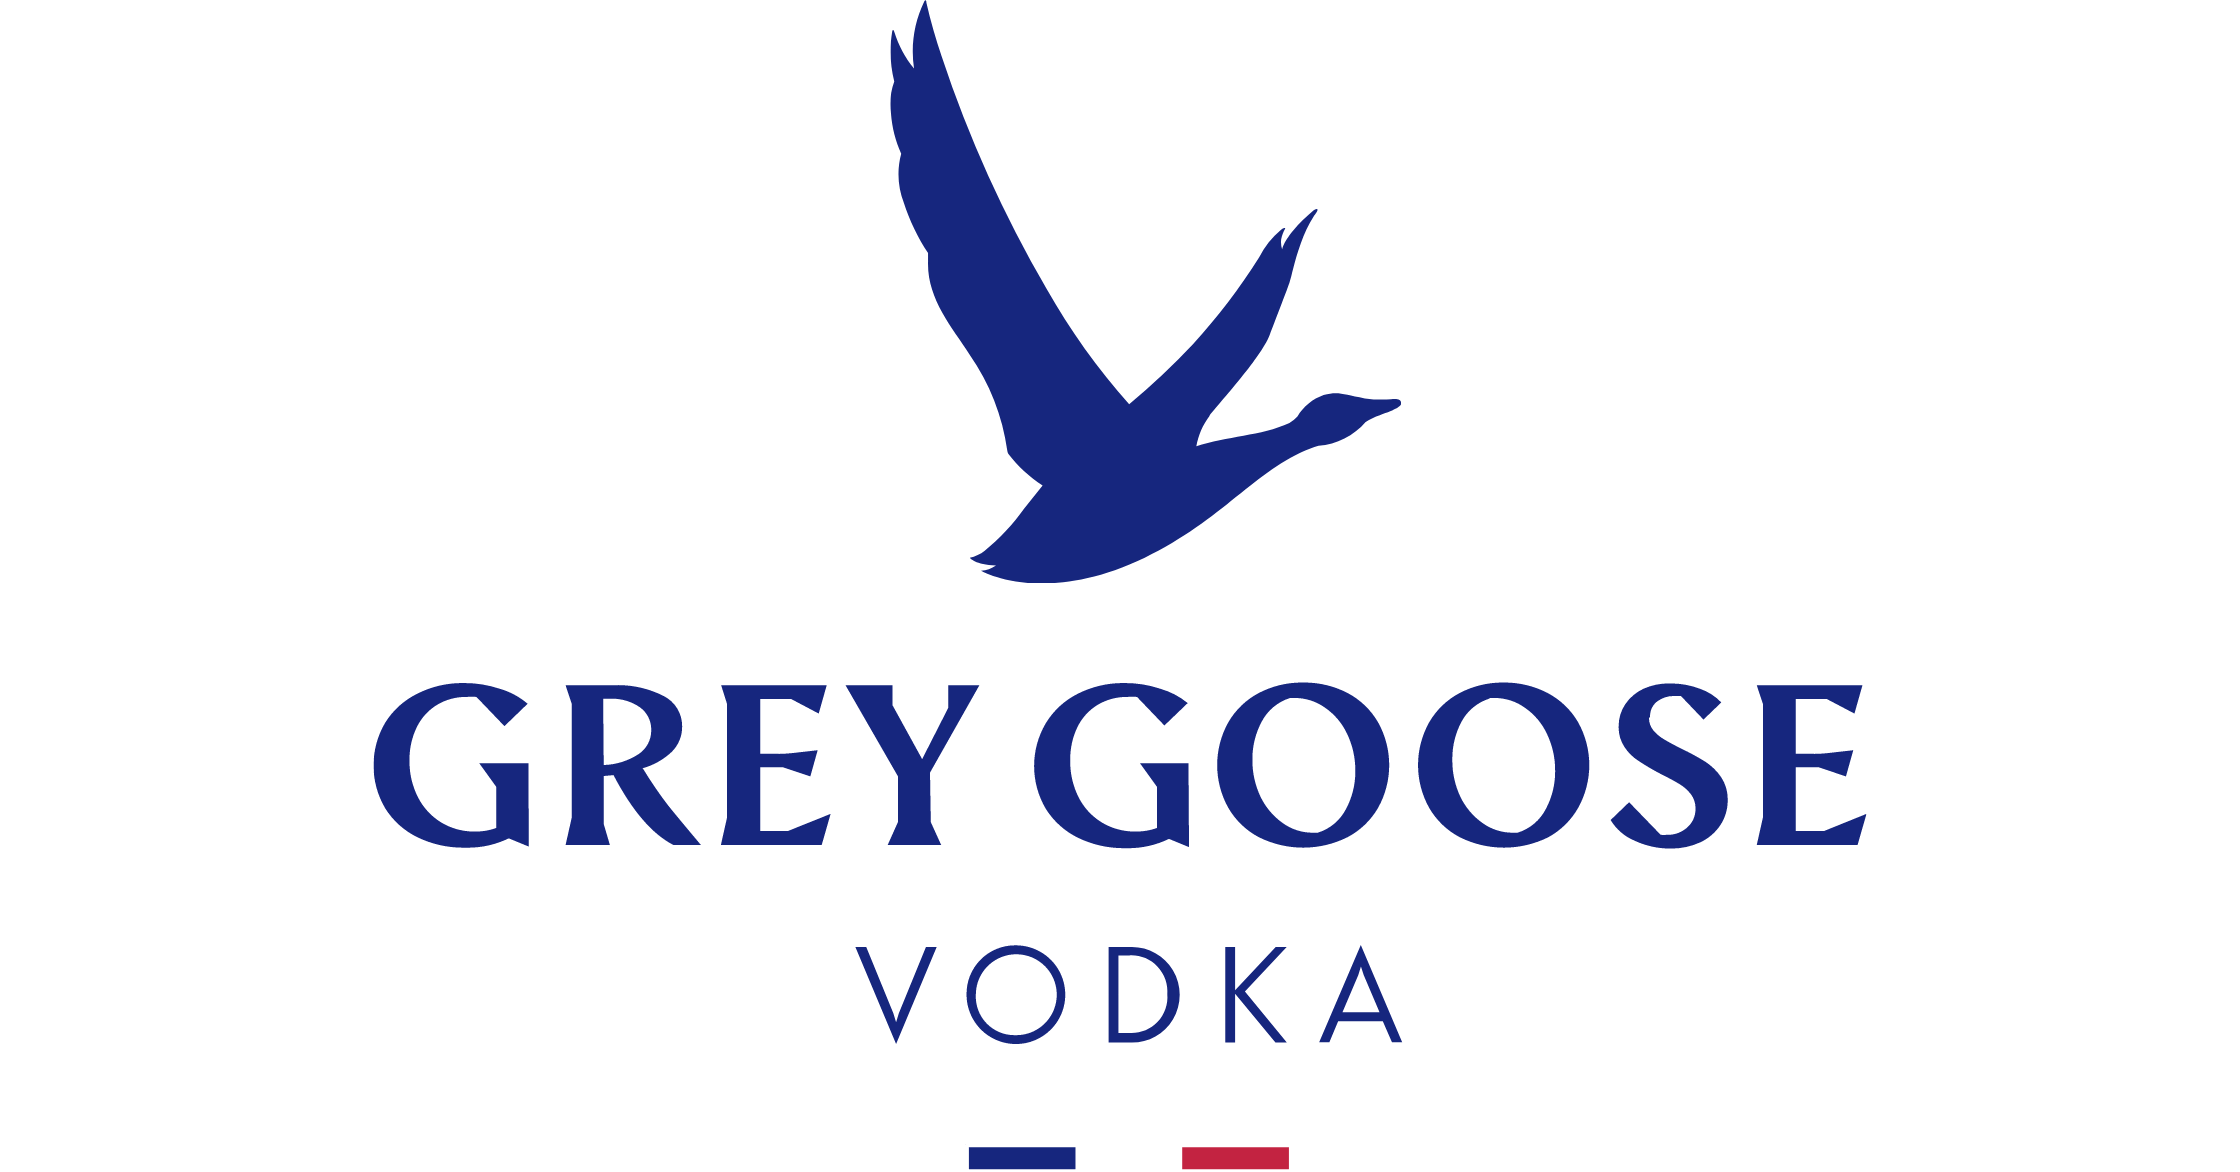 Goose “Grey Goose” logo - info below : r/GoosetheBand